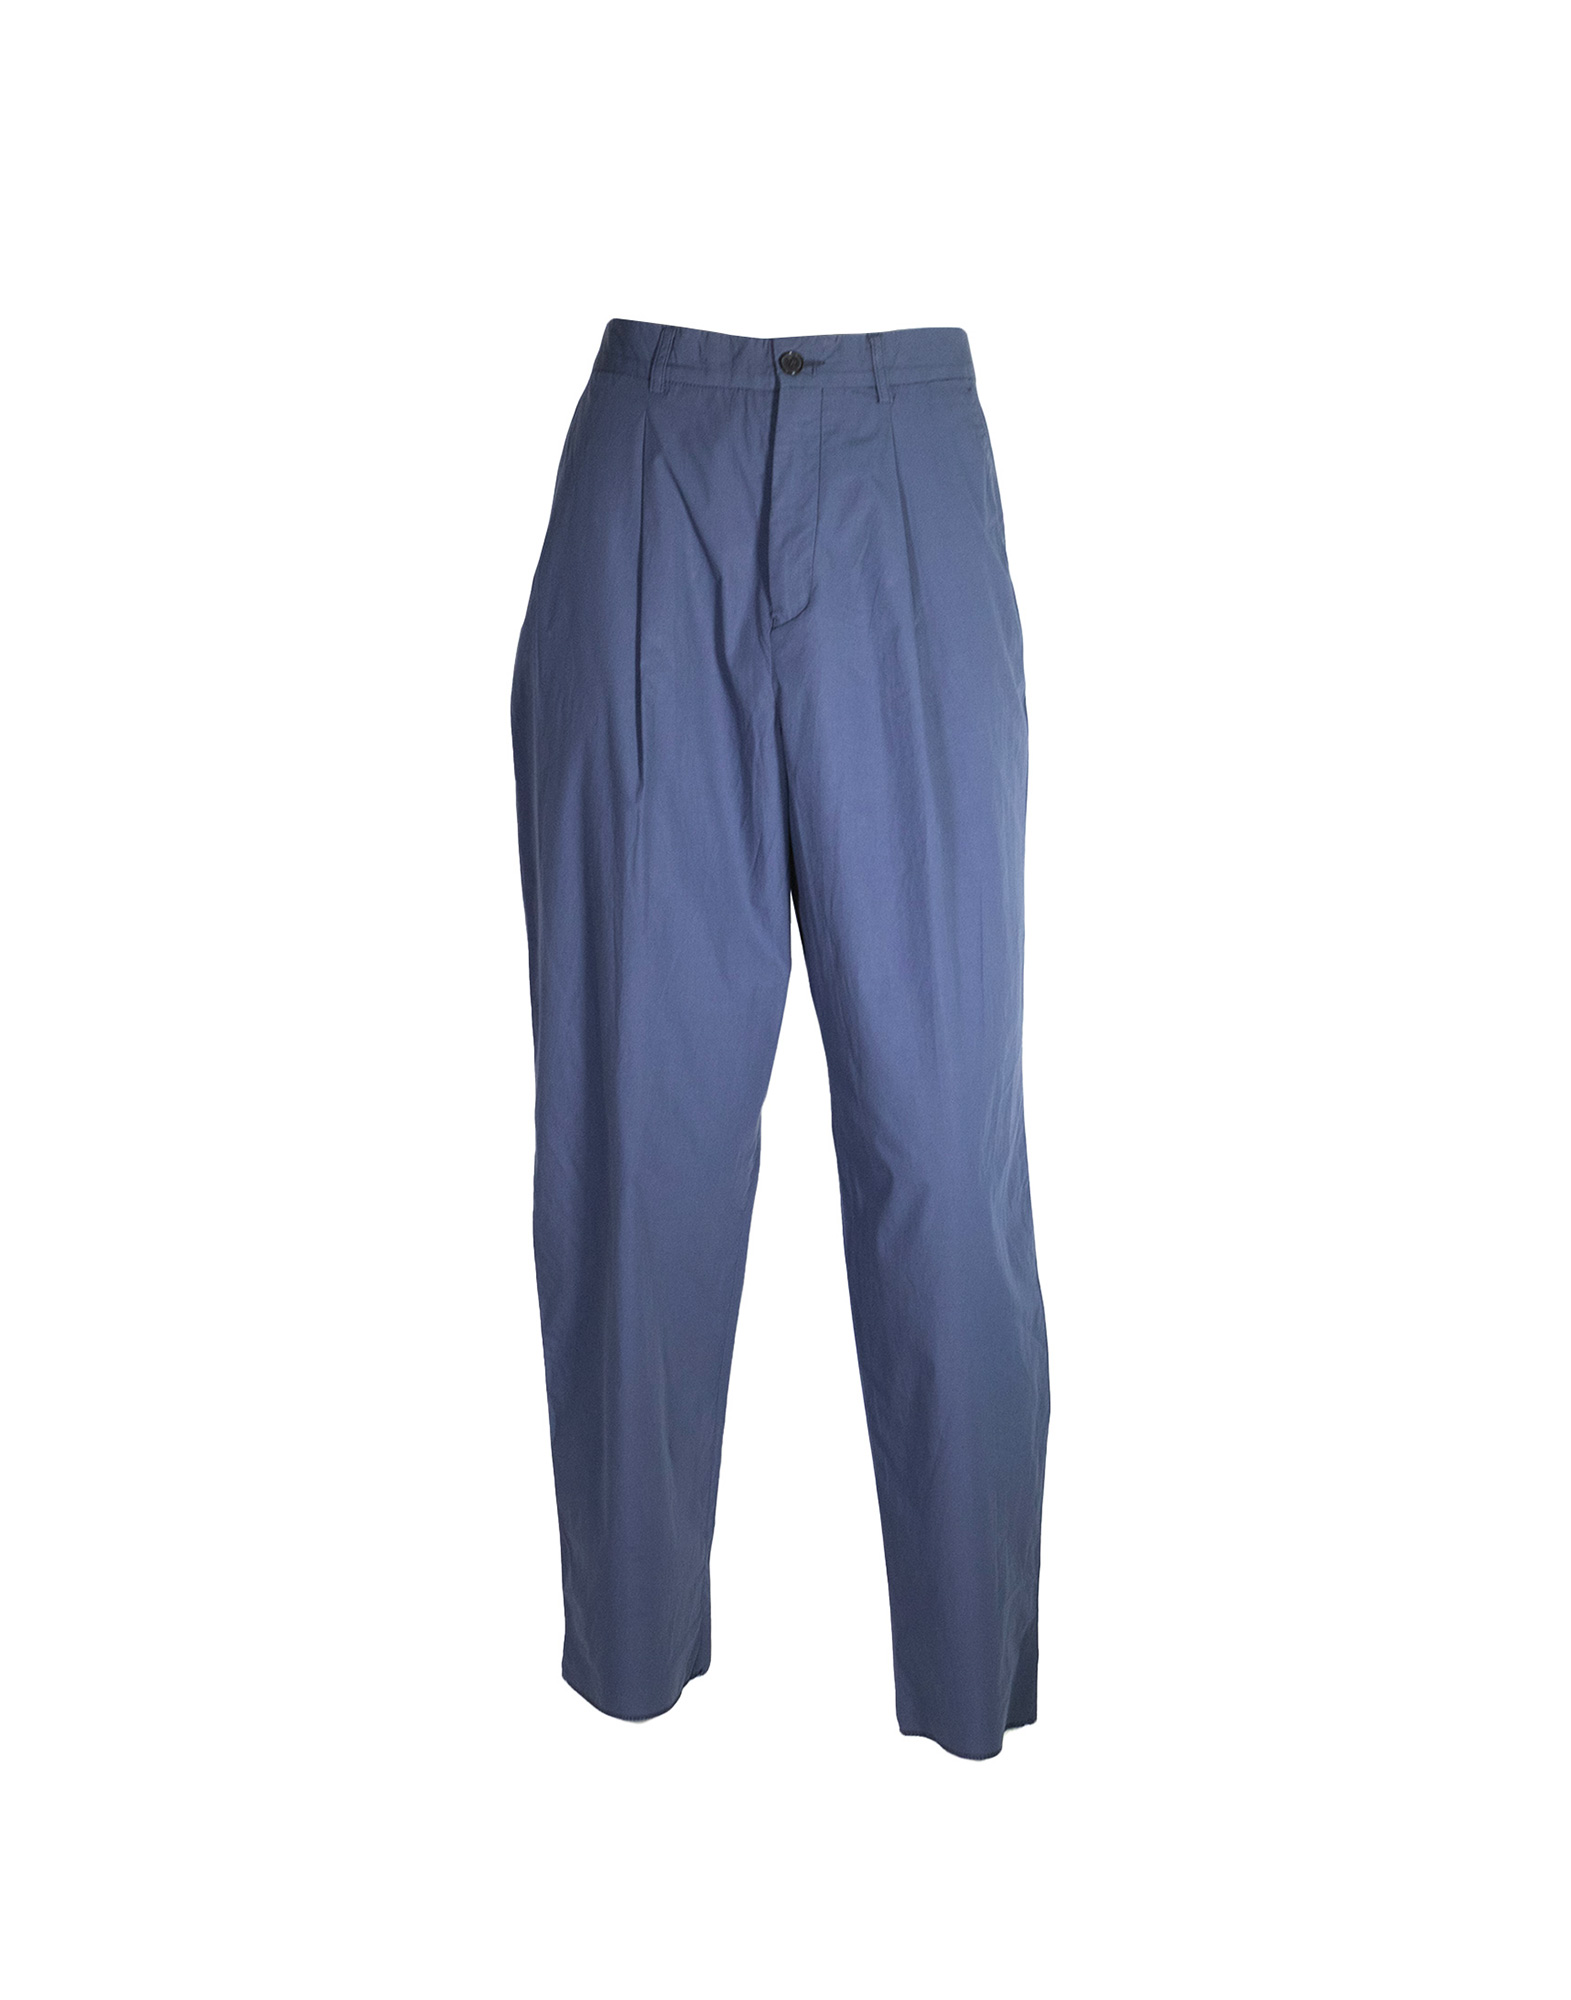 Kenzo - Blue cotton trousers